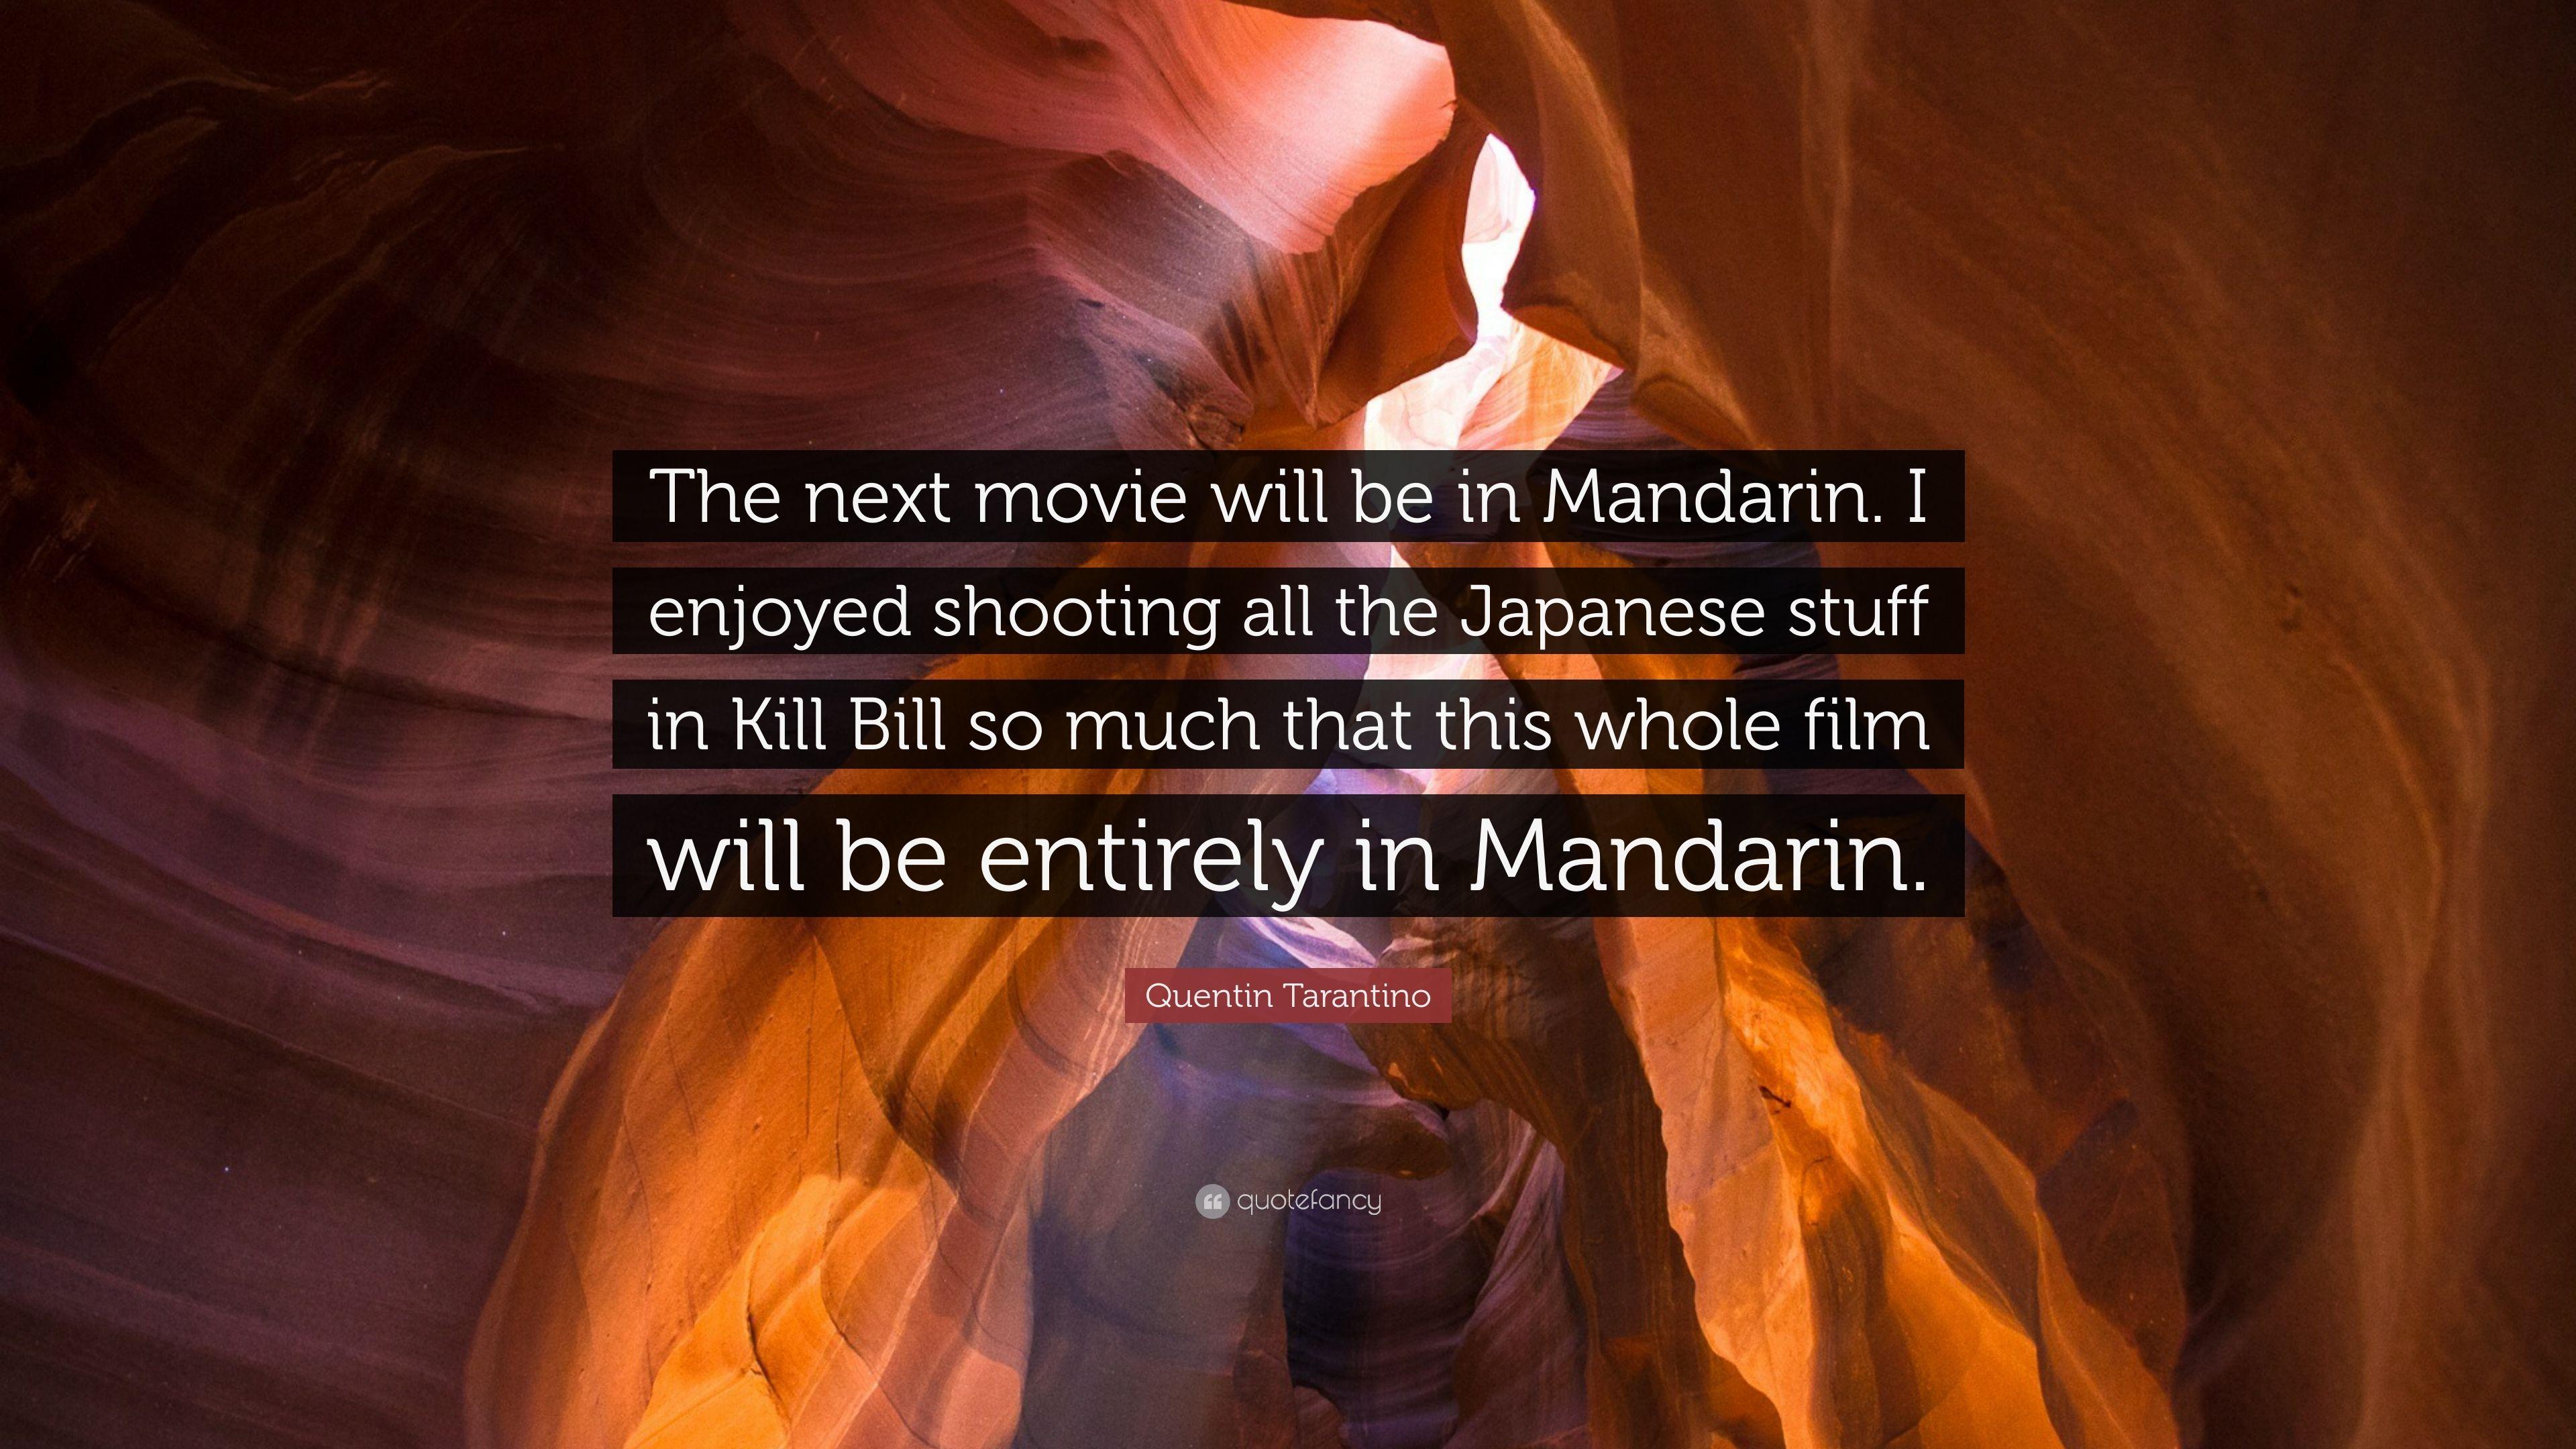 Quentin Tarantino Quote: “The next movie will be in Mandarin. I